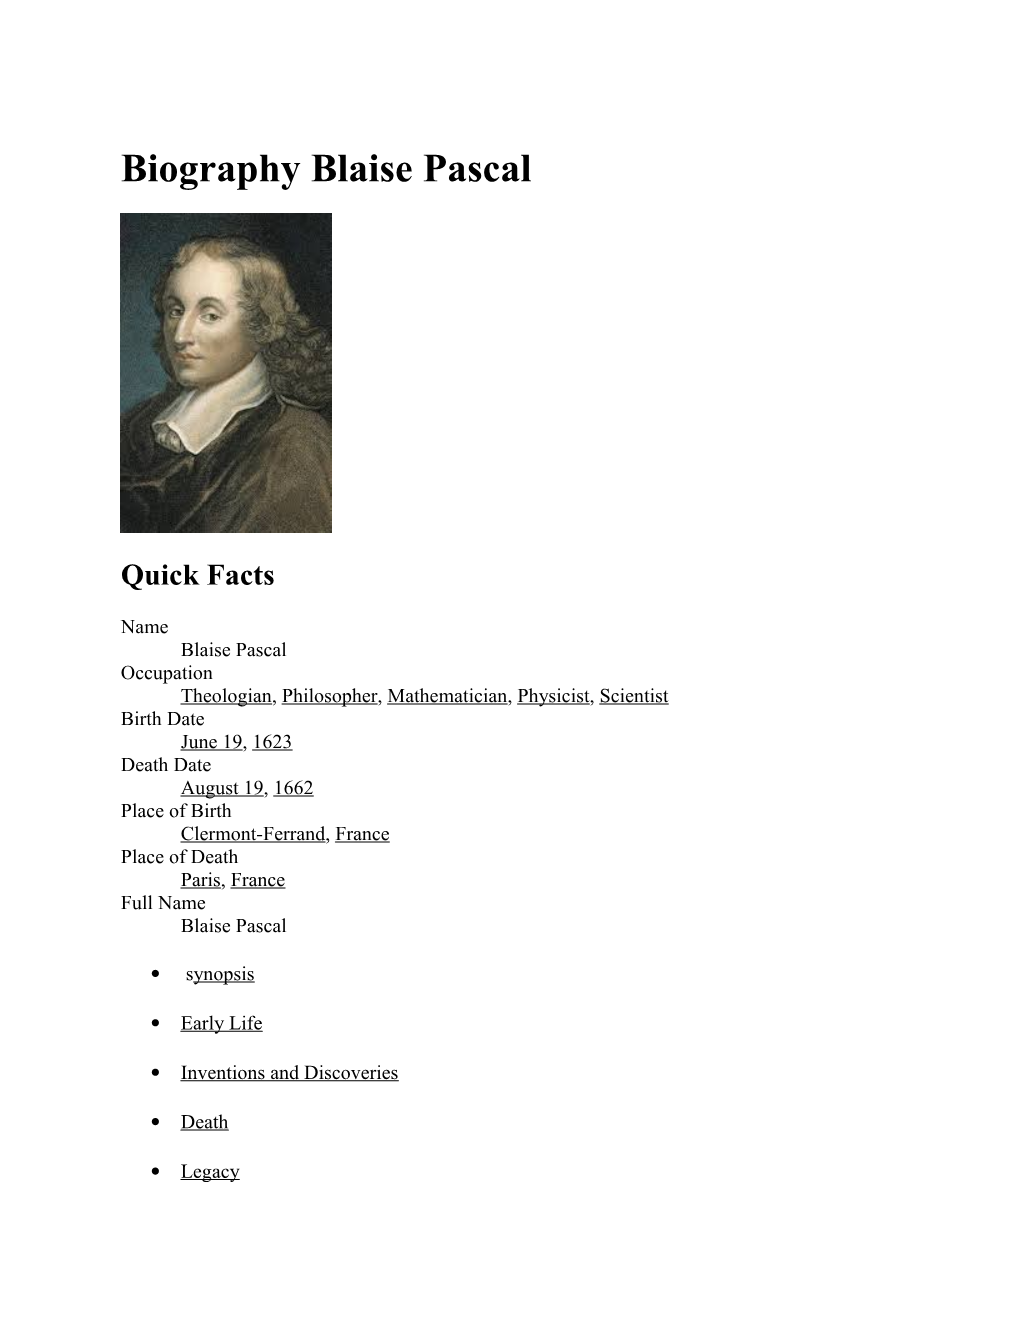 Biography Blaise Pascal